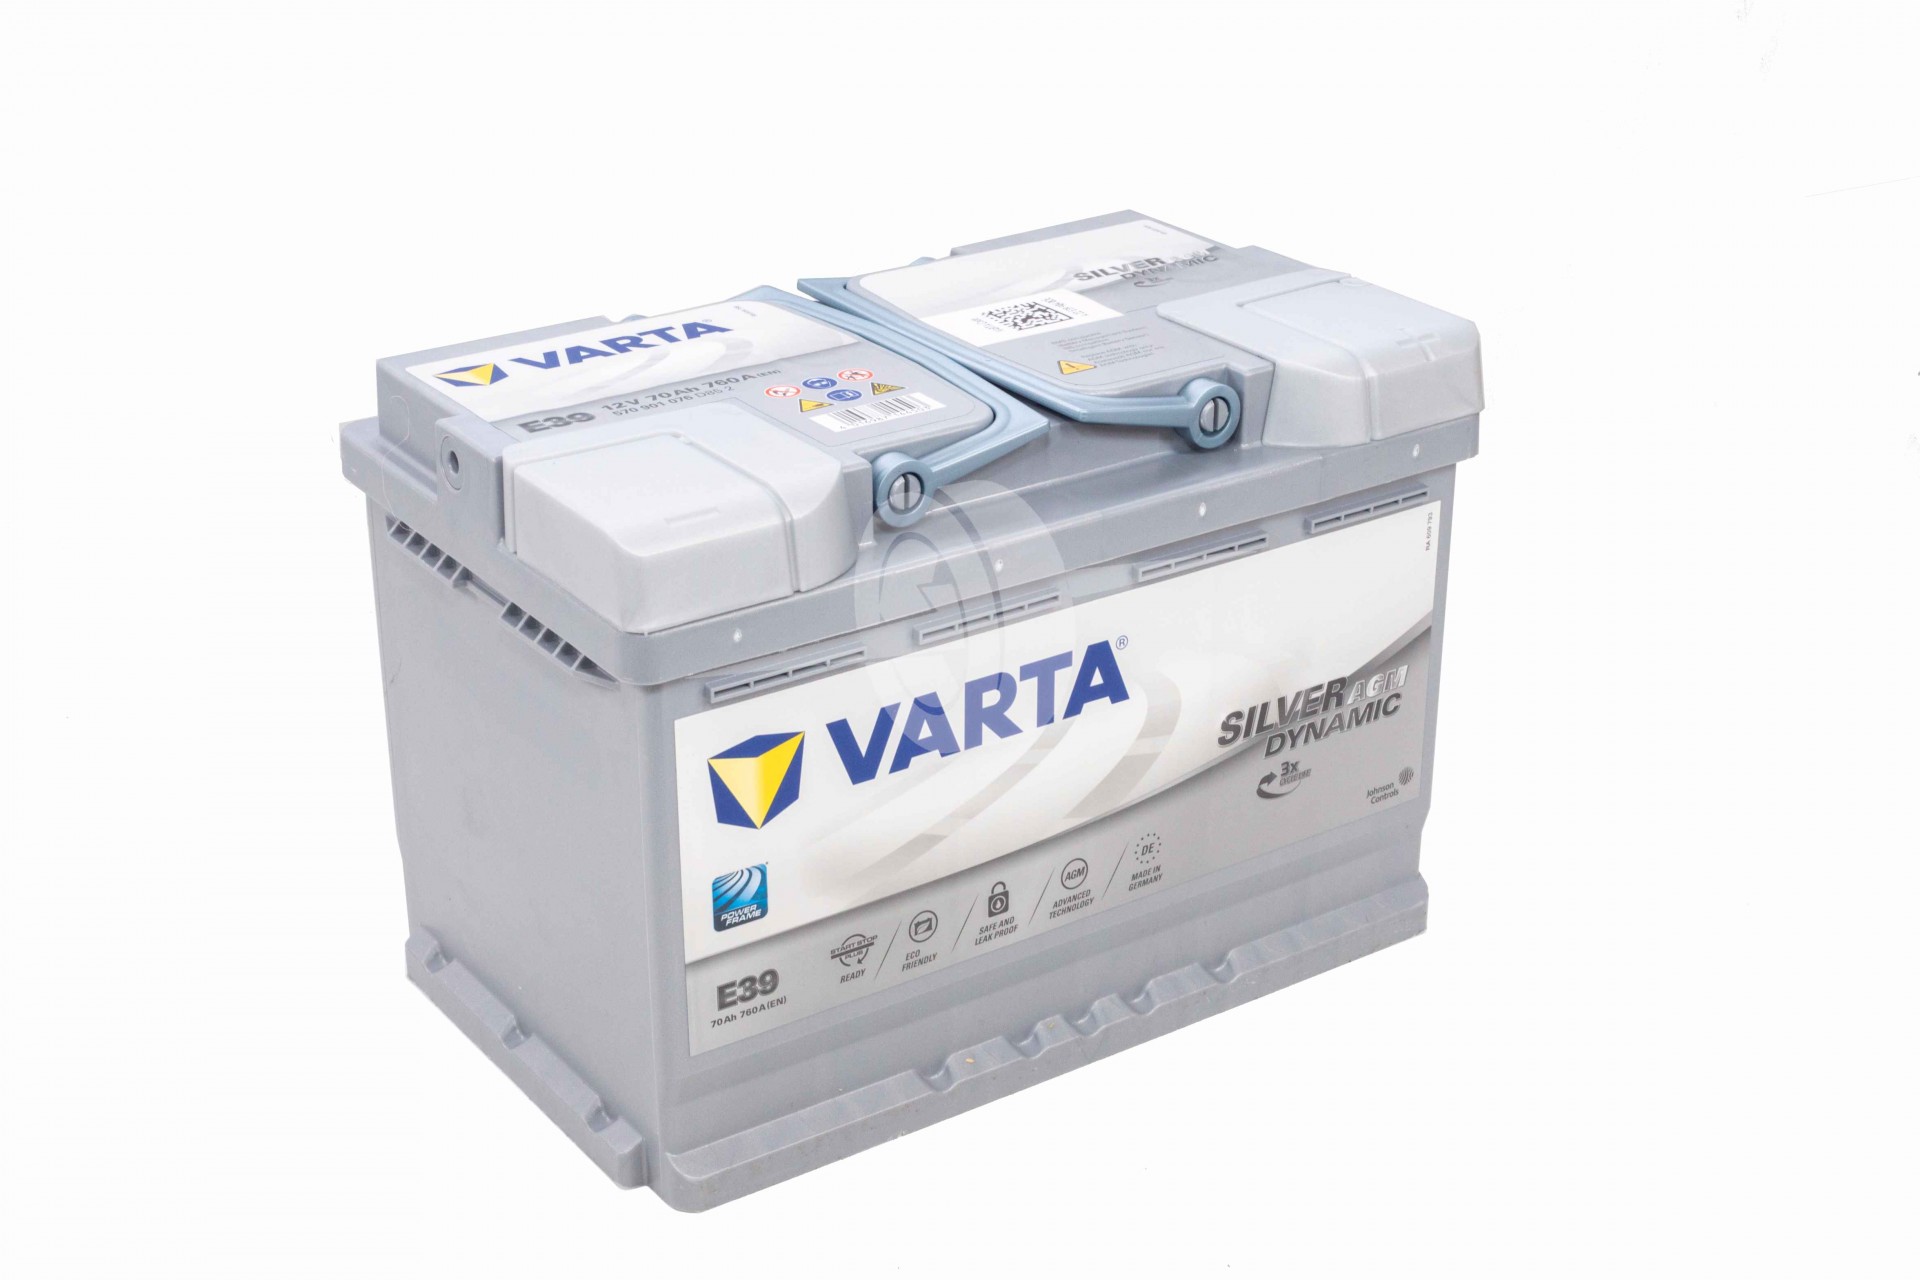 Buy Varta Battery 70Ah E39 Silver Dynamic AGM Online Singapore | ACE